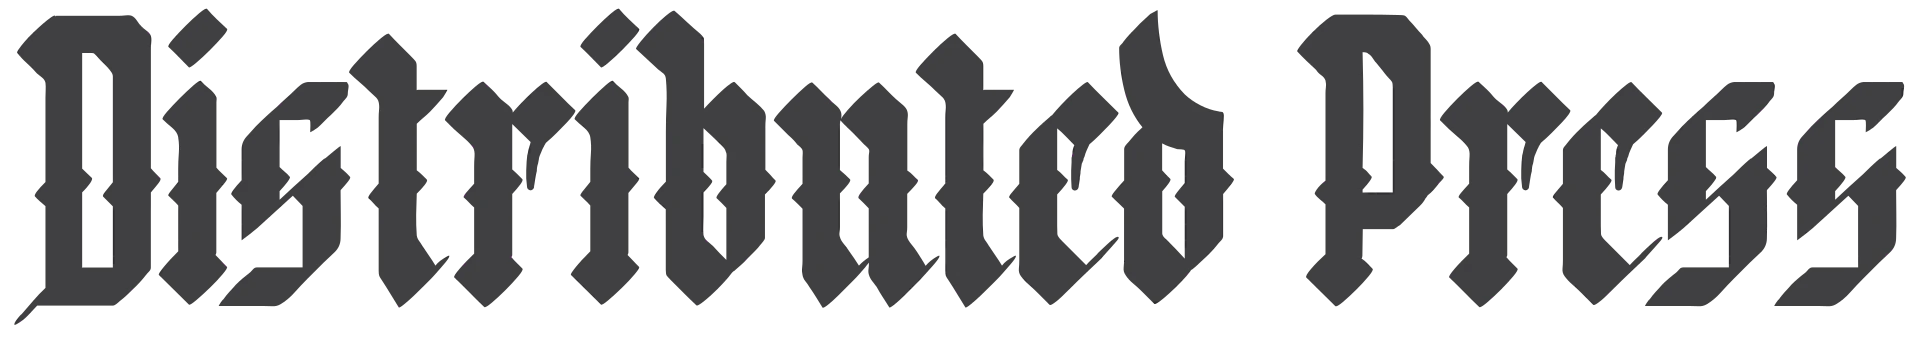 Distributed Press Logo